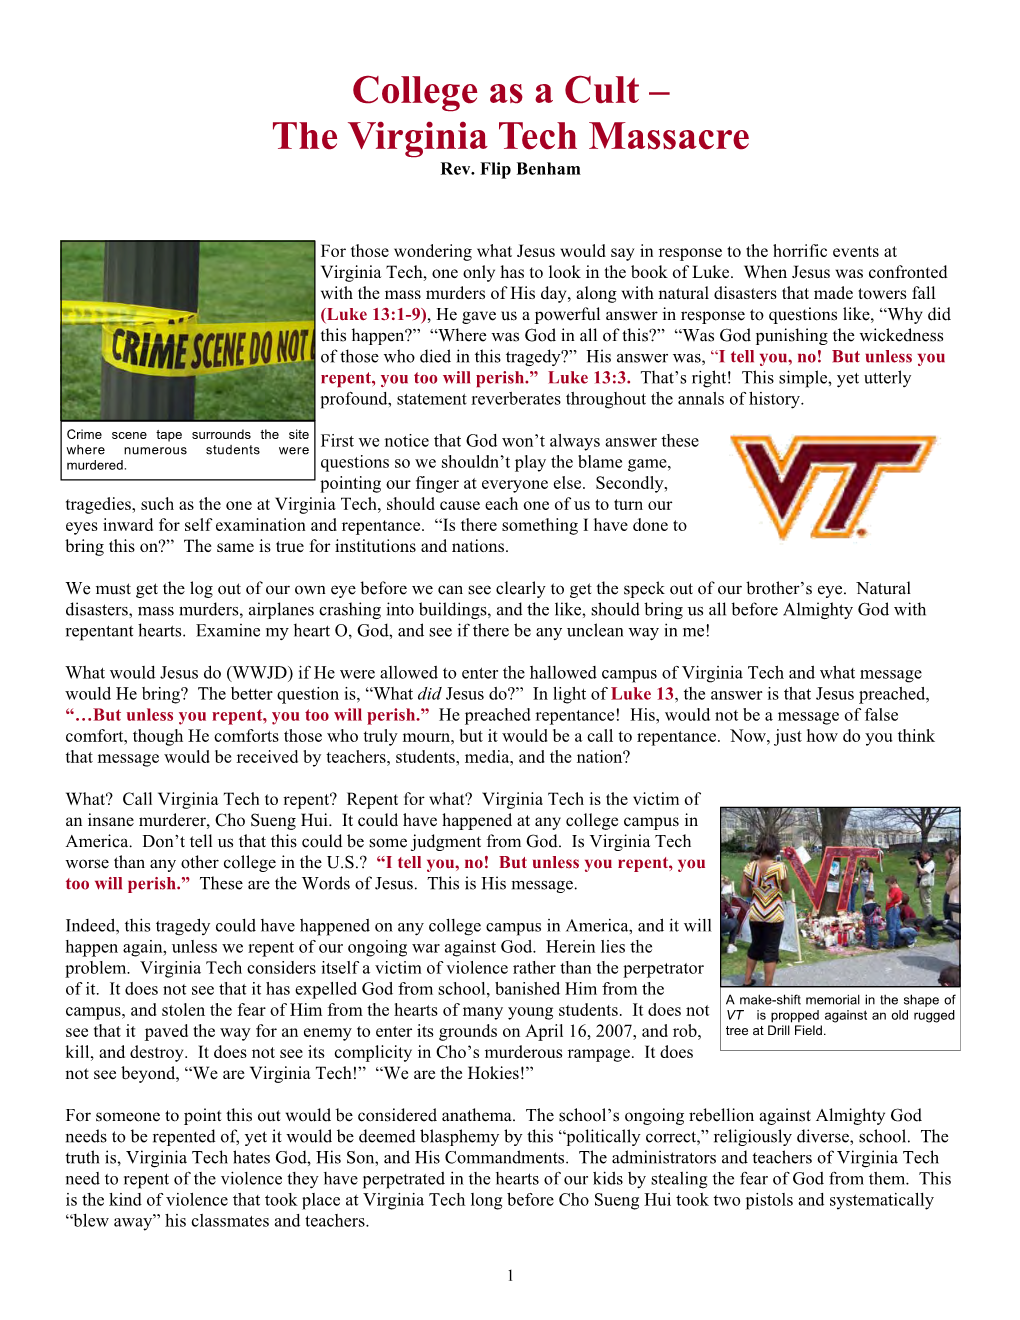 College As a Cult: the Virginia Tech Massacre